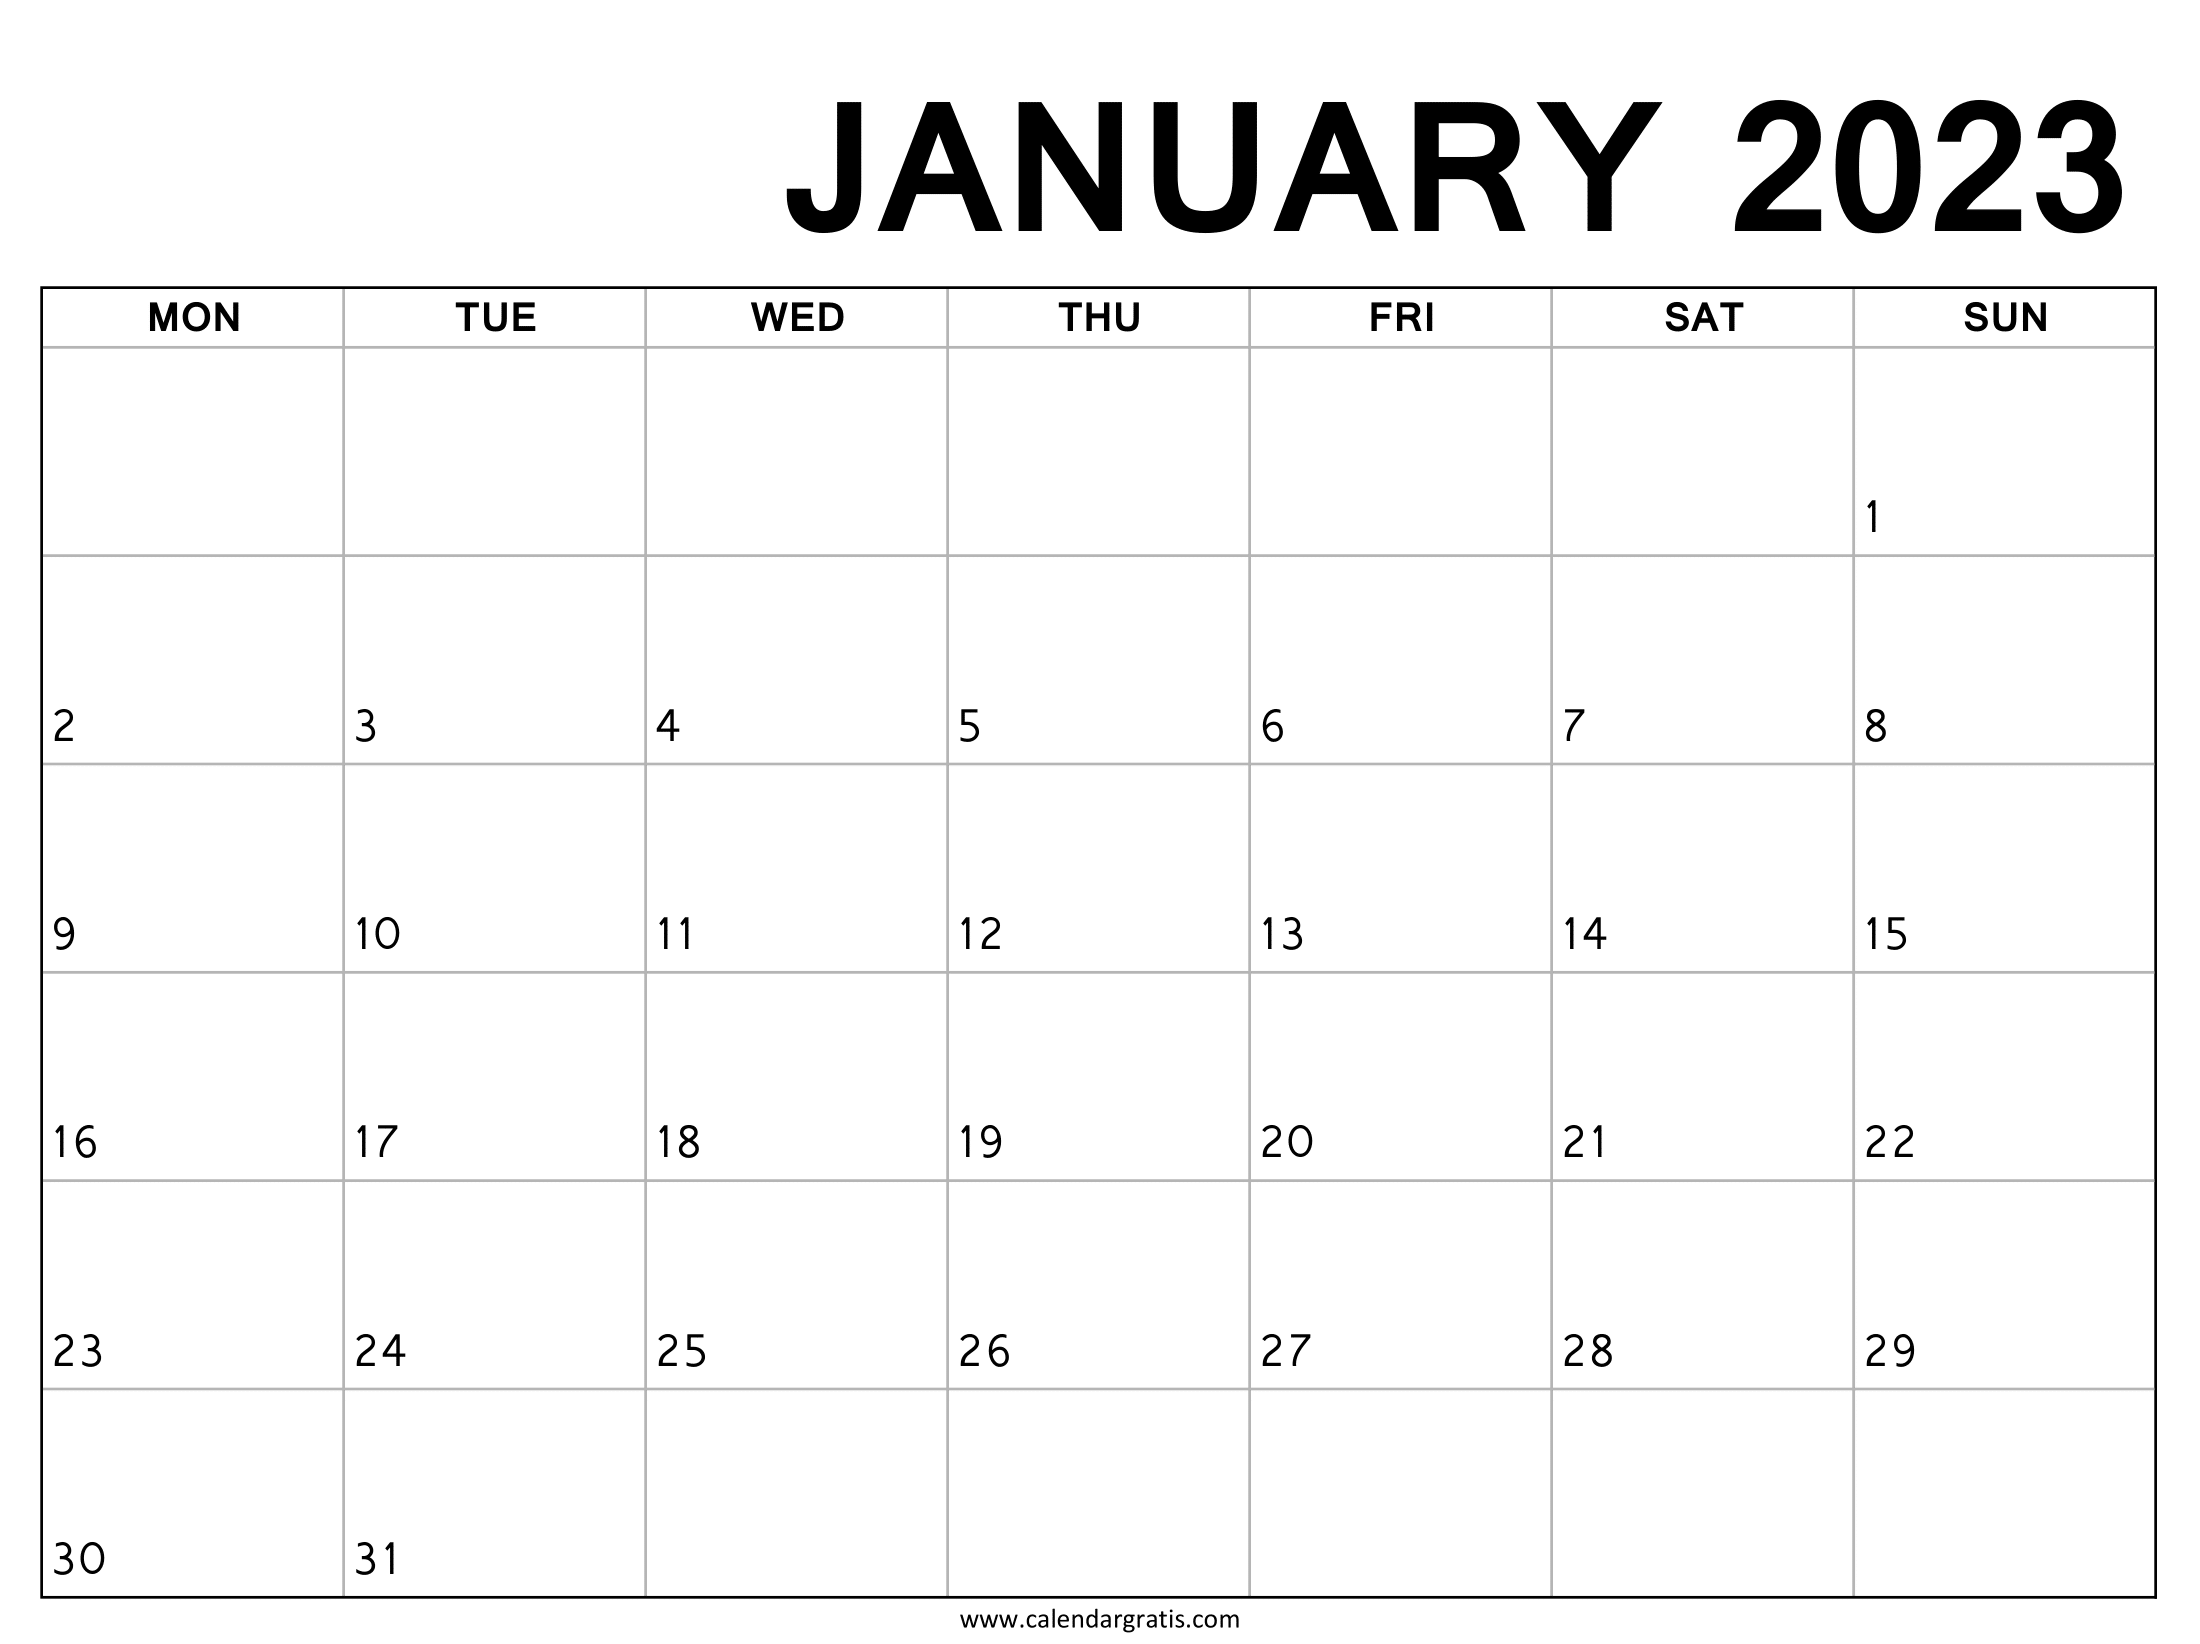 January 2023 Calendar Printable Monday Start for Employees.